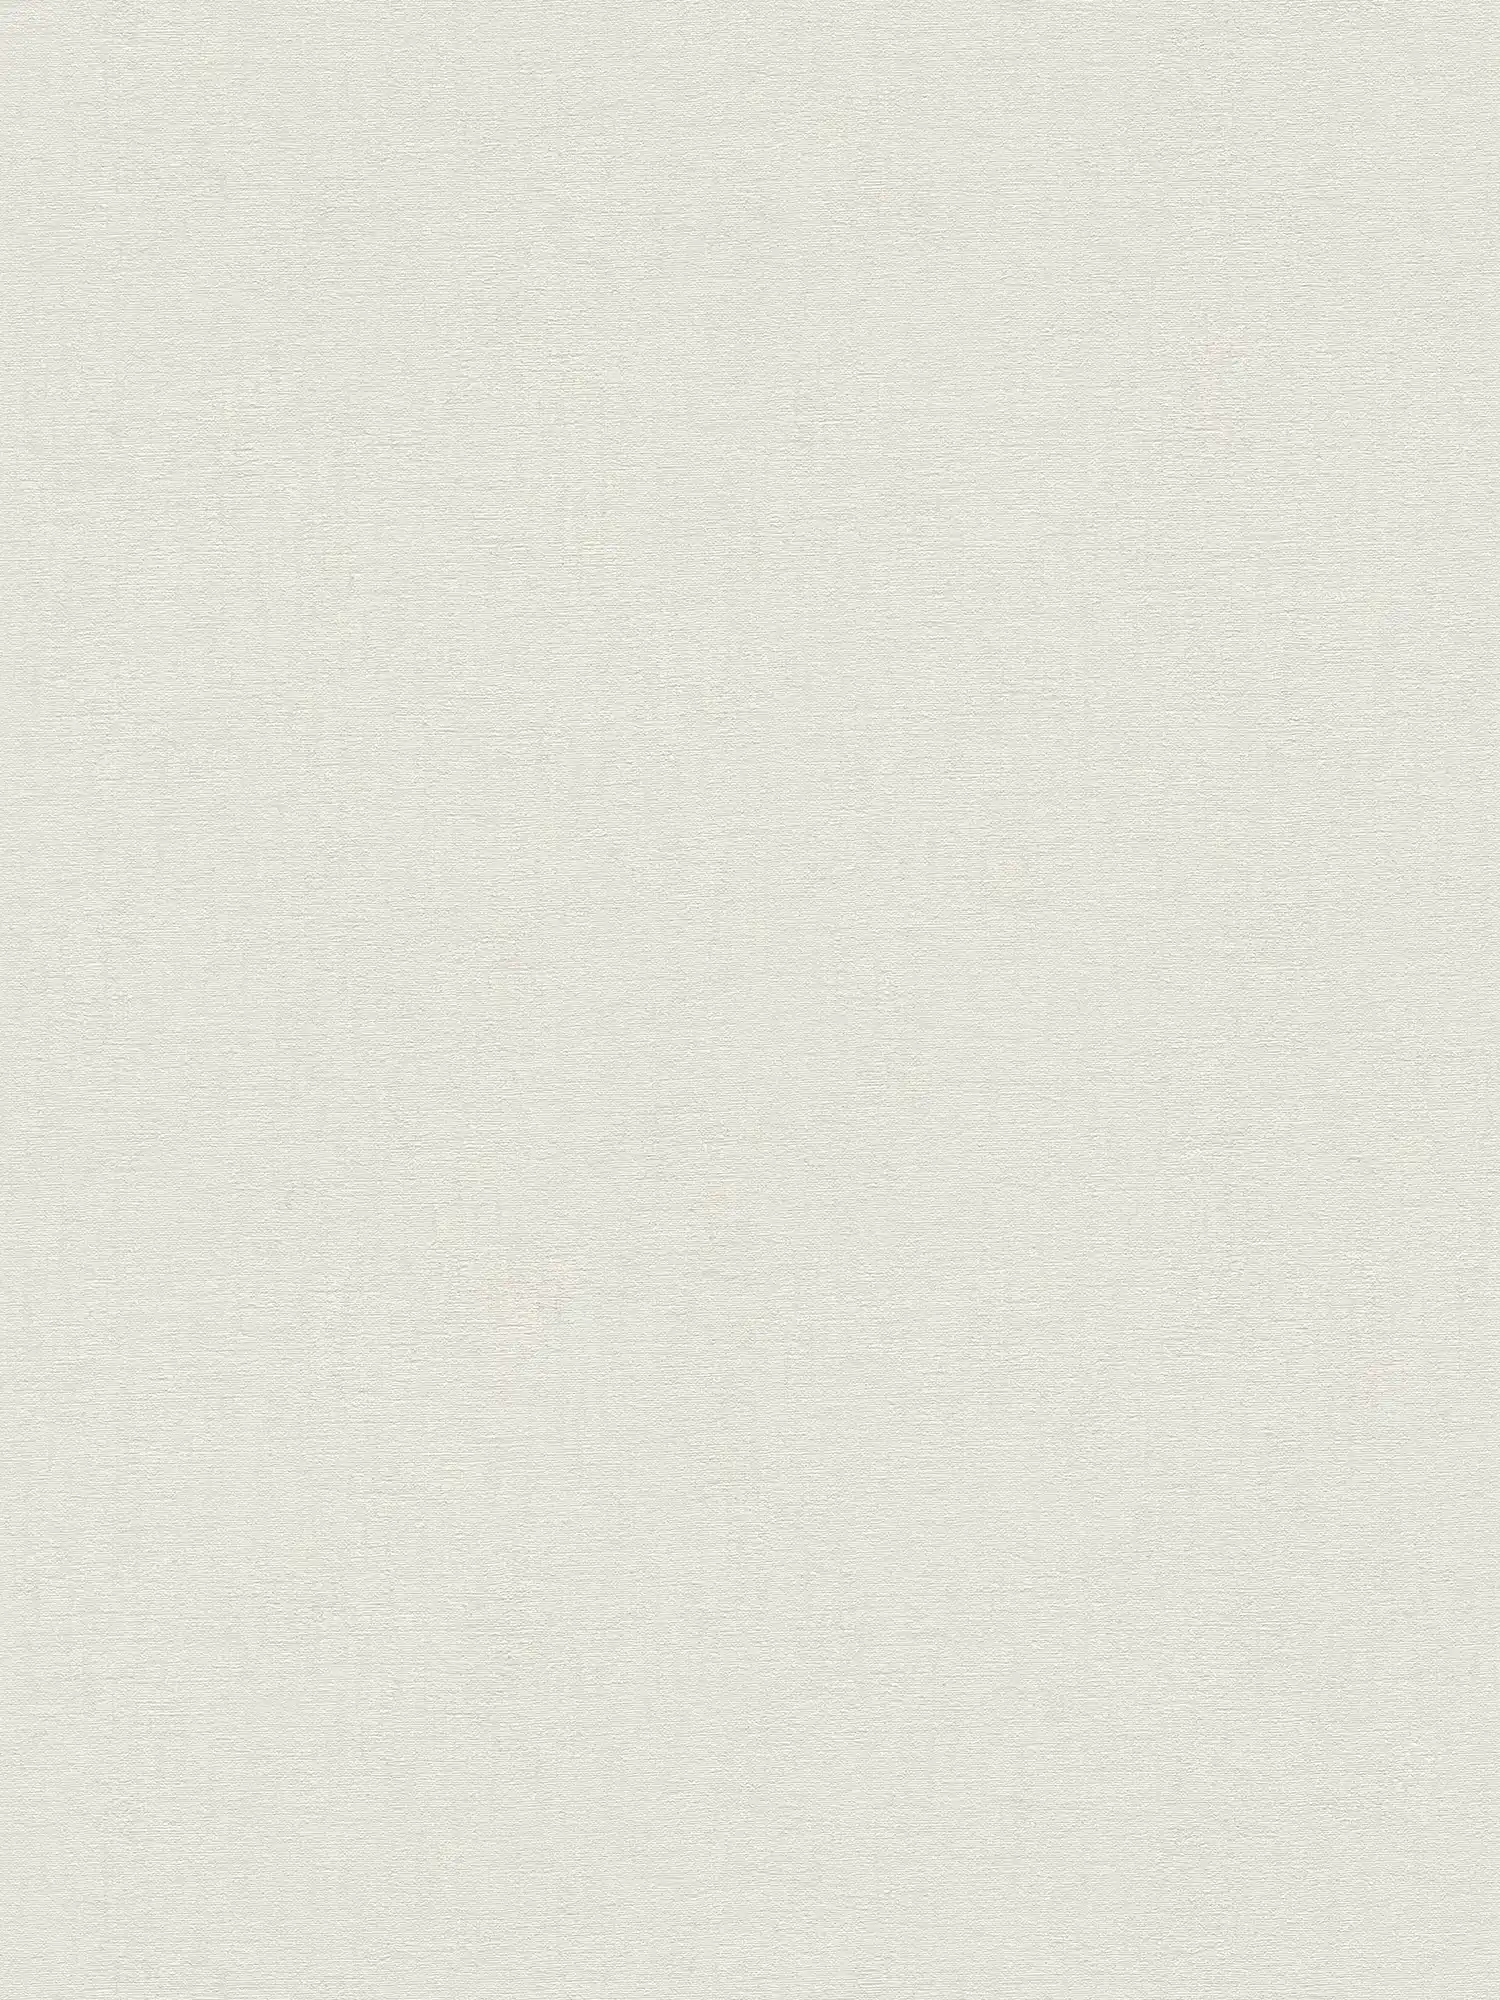 Single-coloured non-woven wallpaper with textile pattern - white, light grey
